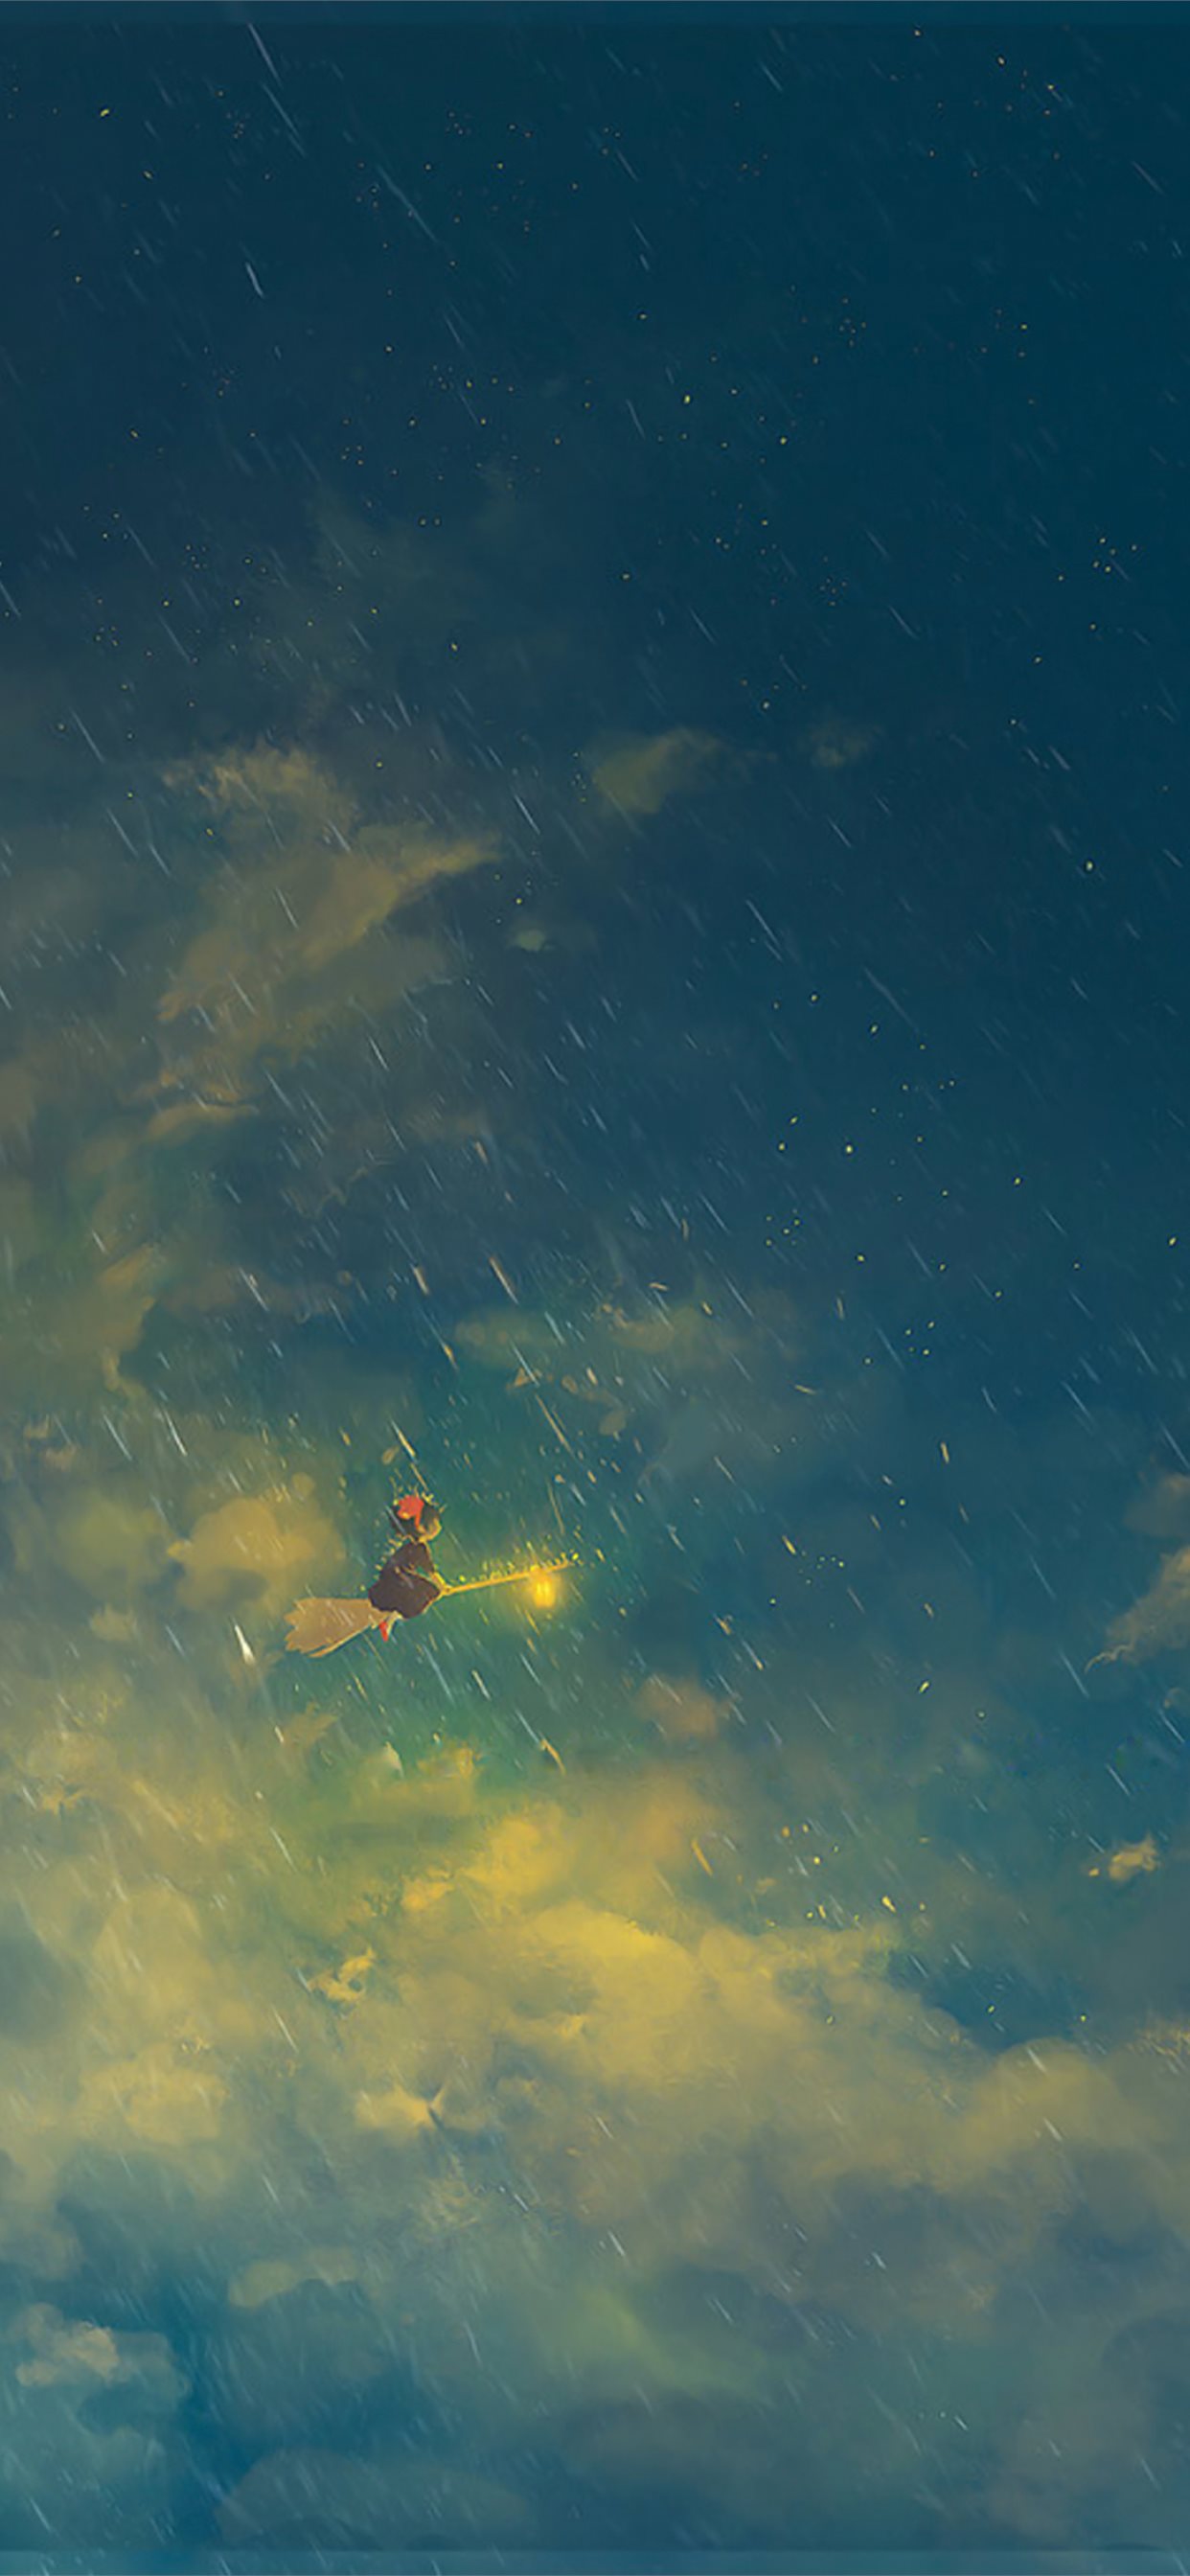 Studio Ghibli  Studio Ghibli released a free phone wallpaper of